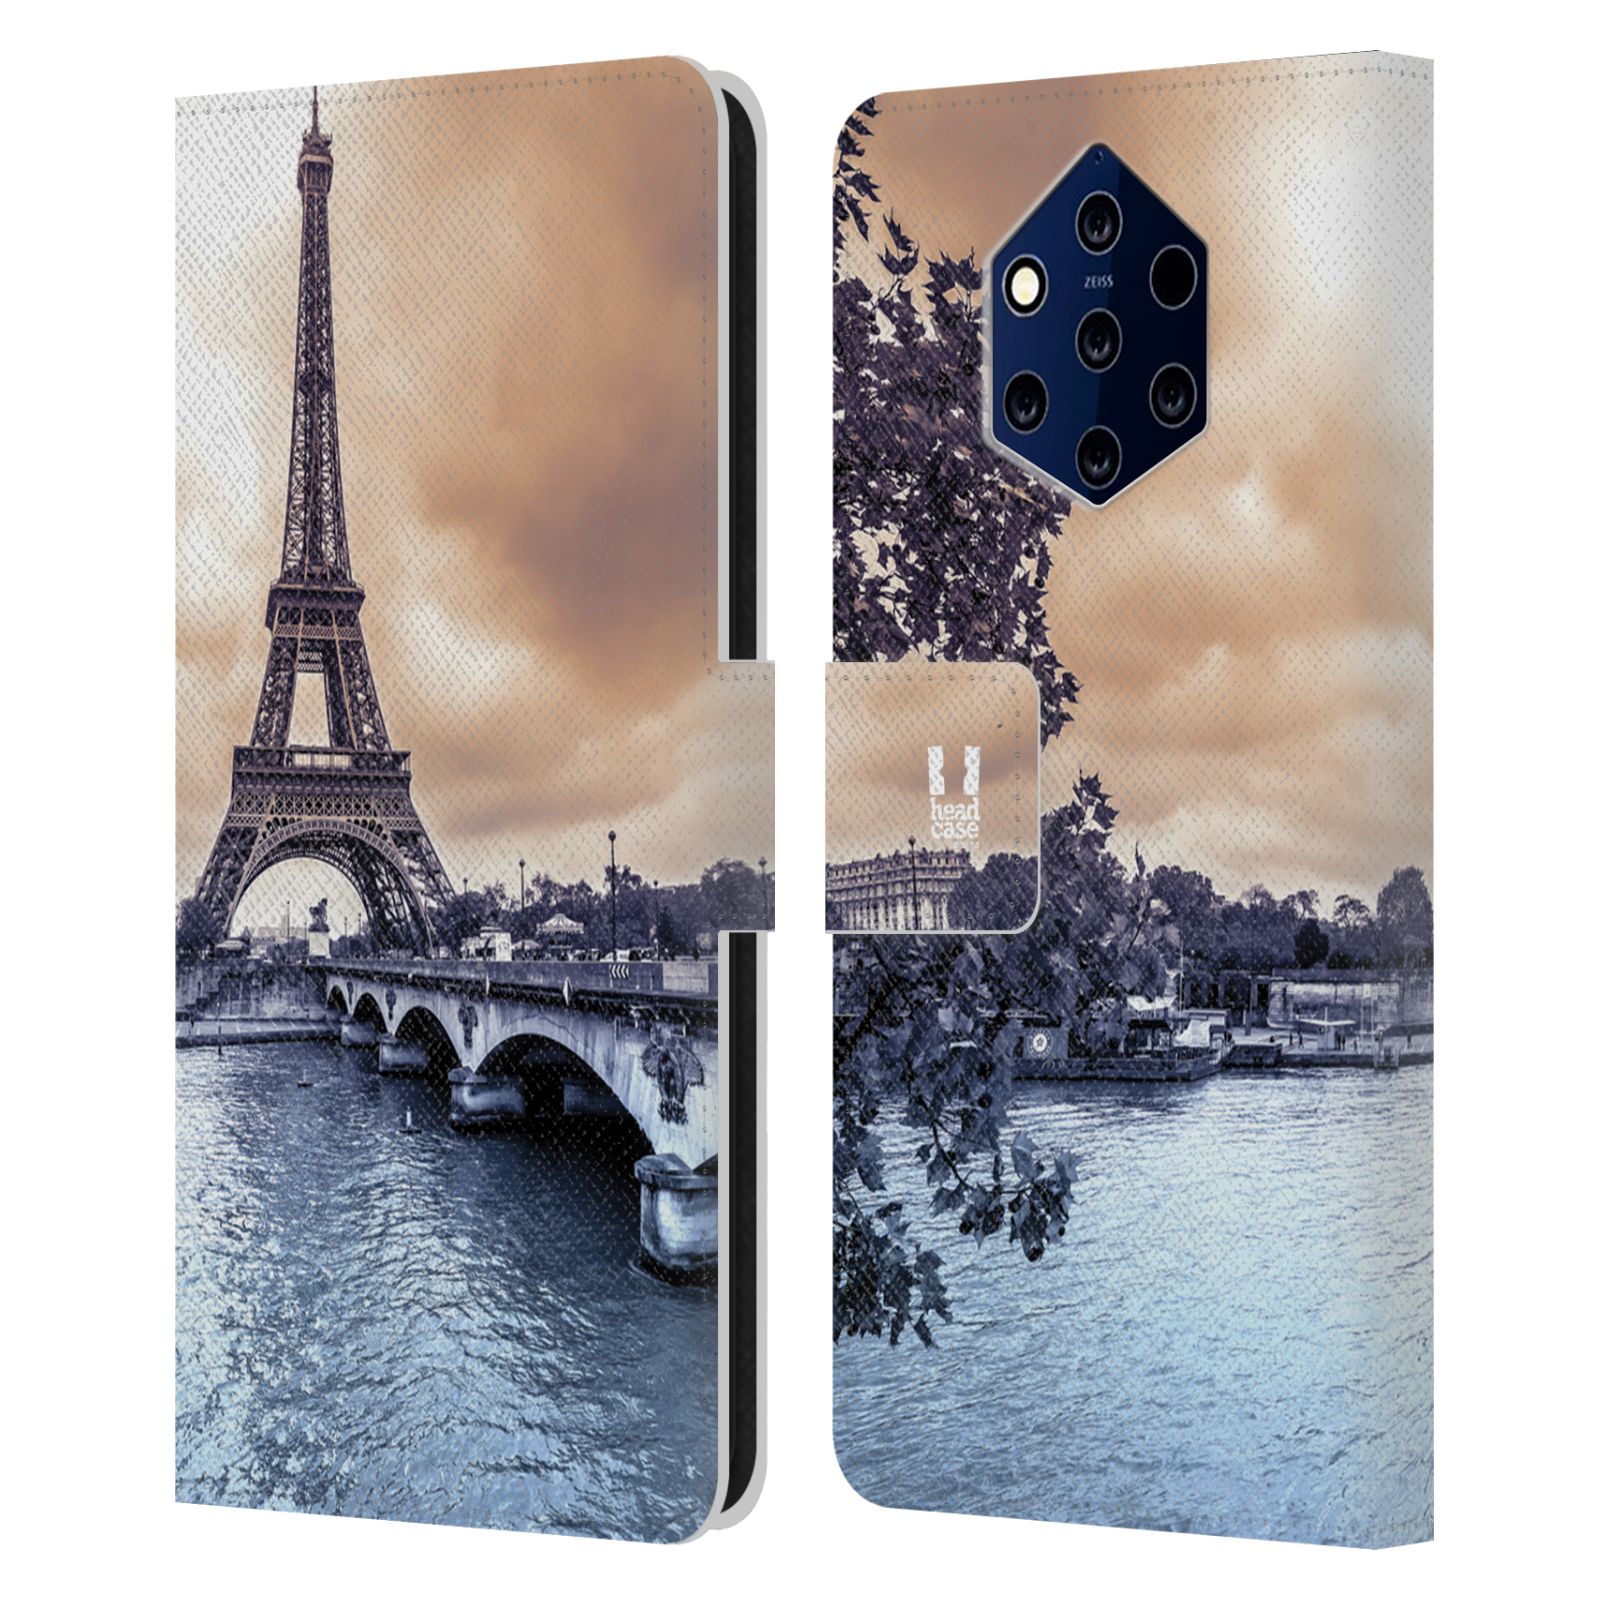 Pouzdro pro mobil Nokia 9 PureView - Eiffelova věž Paříž - Francie